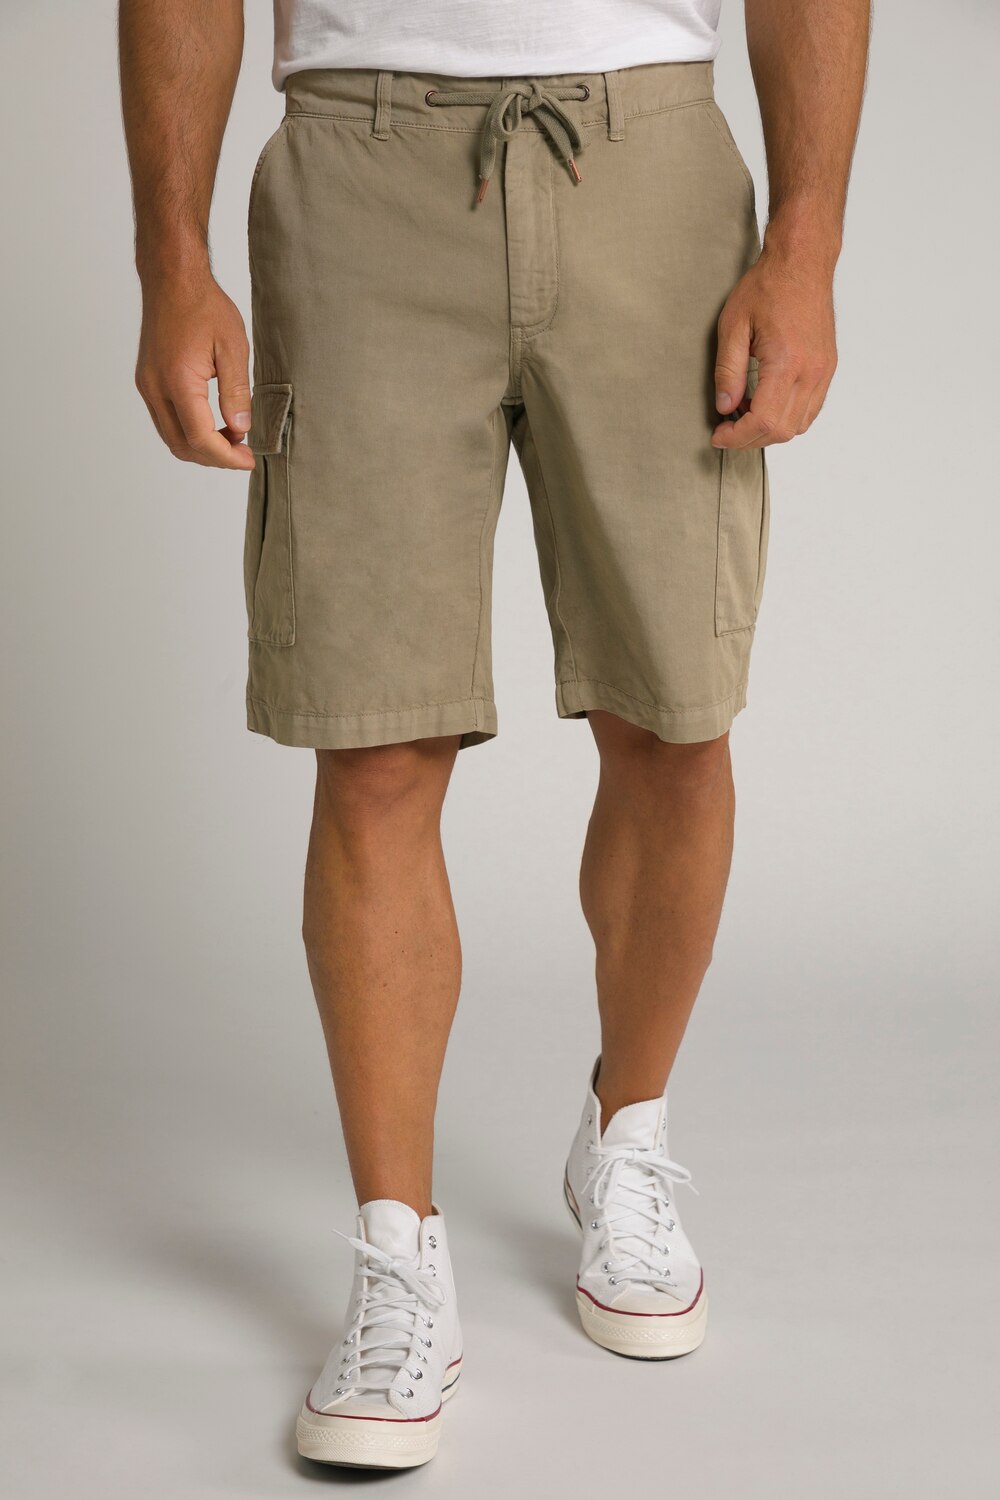 Plus Size Garment Dyed Linen Blend Bermuda Shorts, Man, brown, size: 3XL, cotton/linen, JP1880